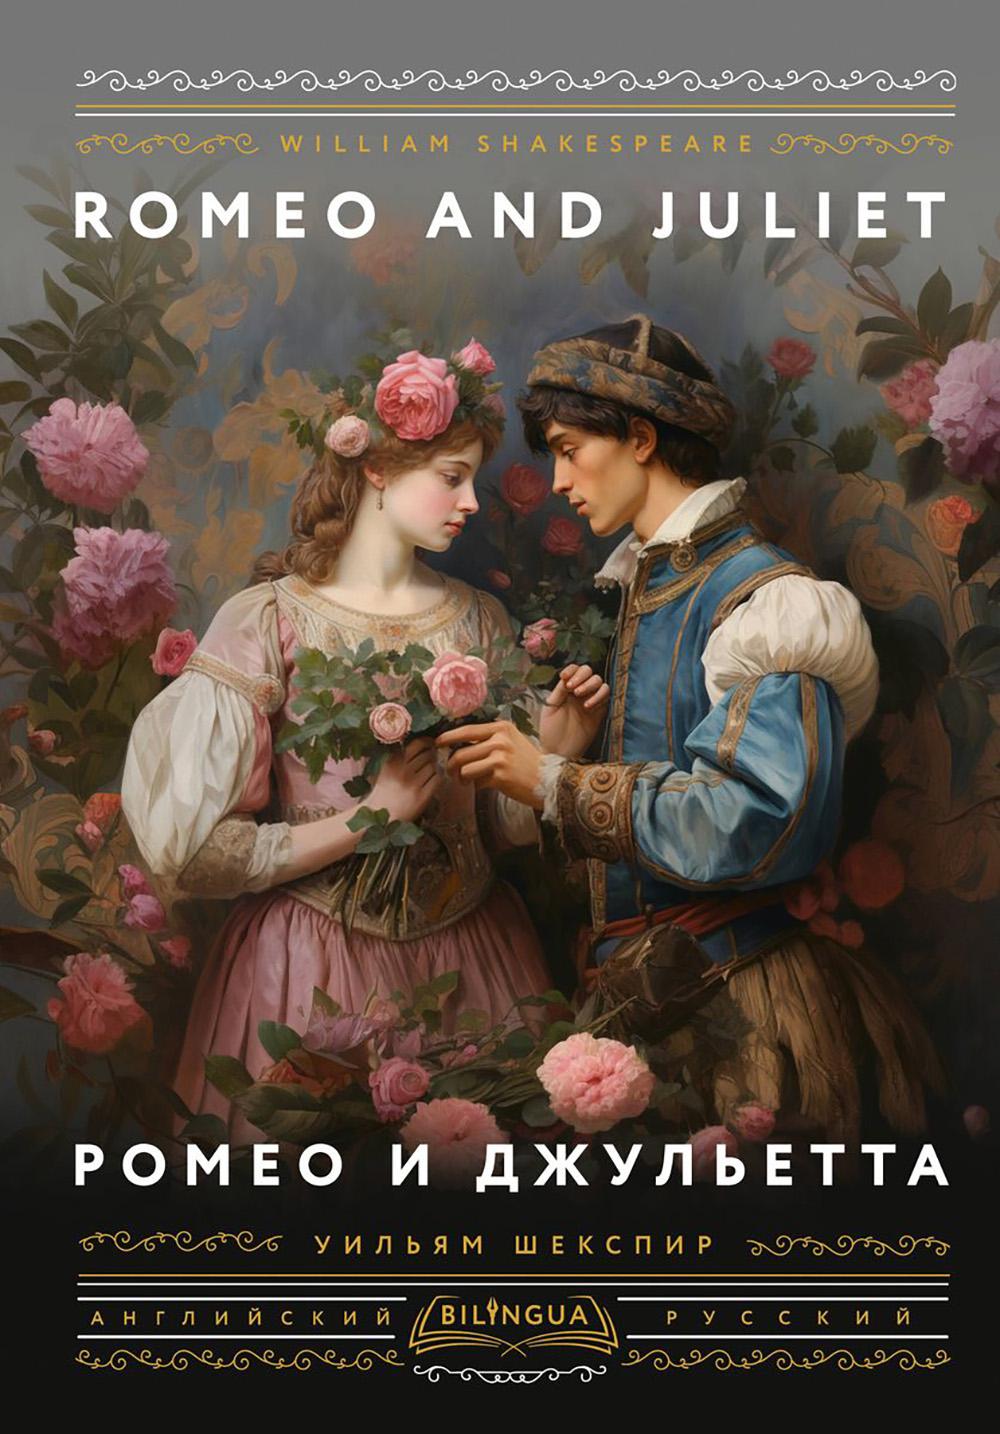    Romeo and Juliet